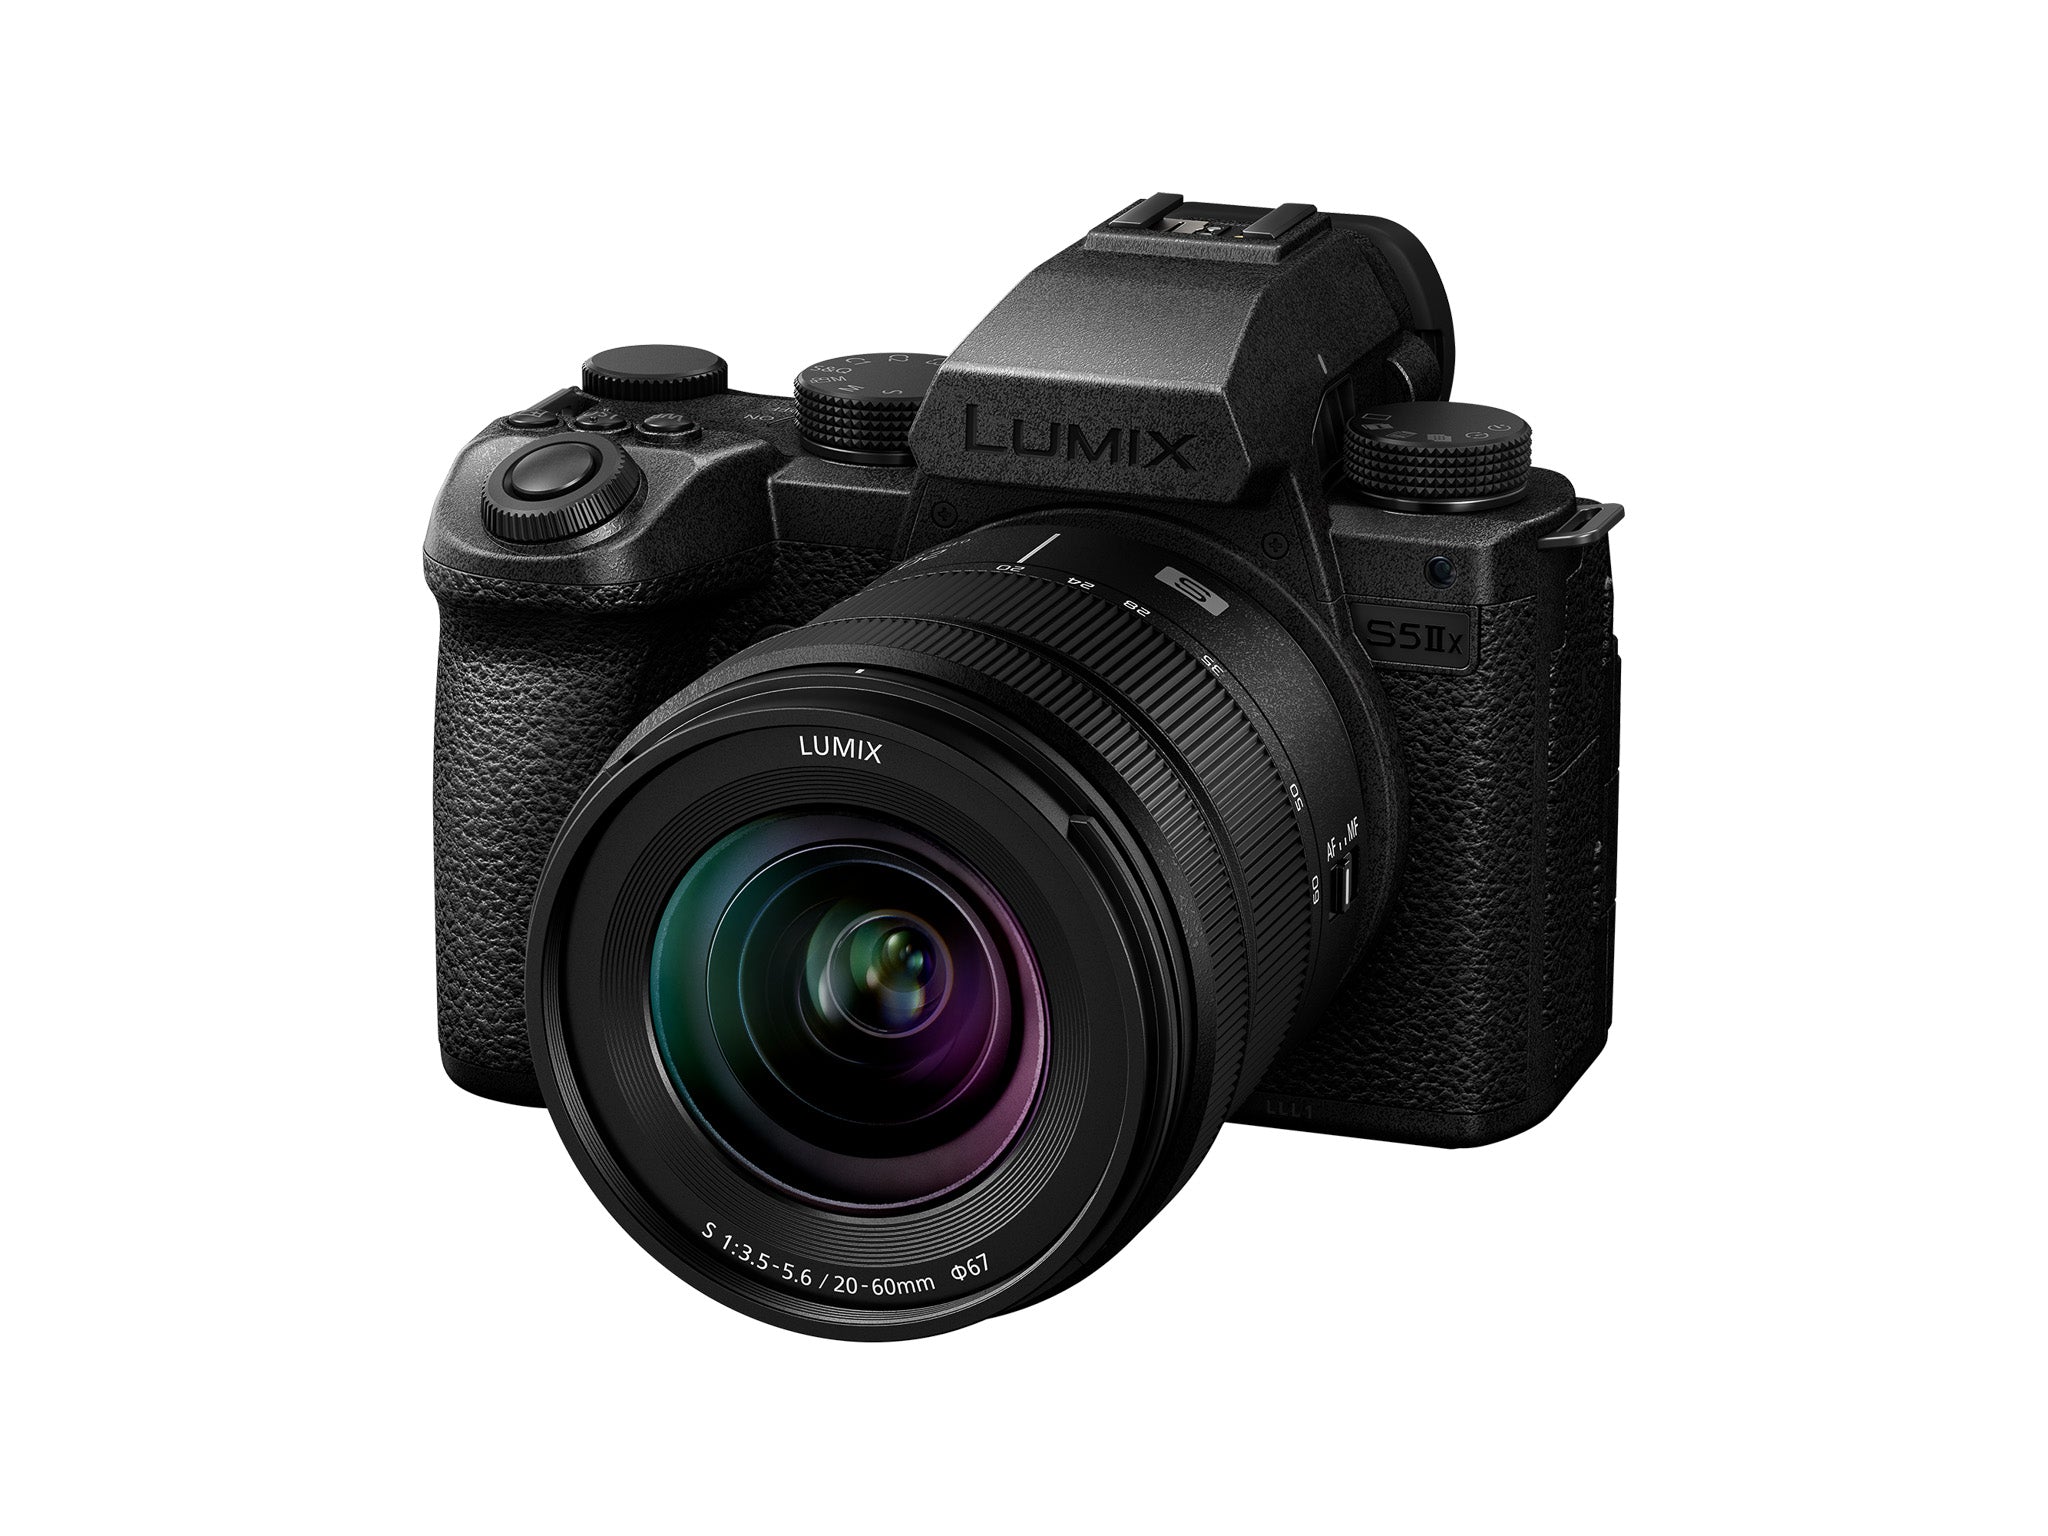 Panasonic Lumix S5IIX Camera with 20-60mm Lens Kit